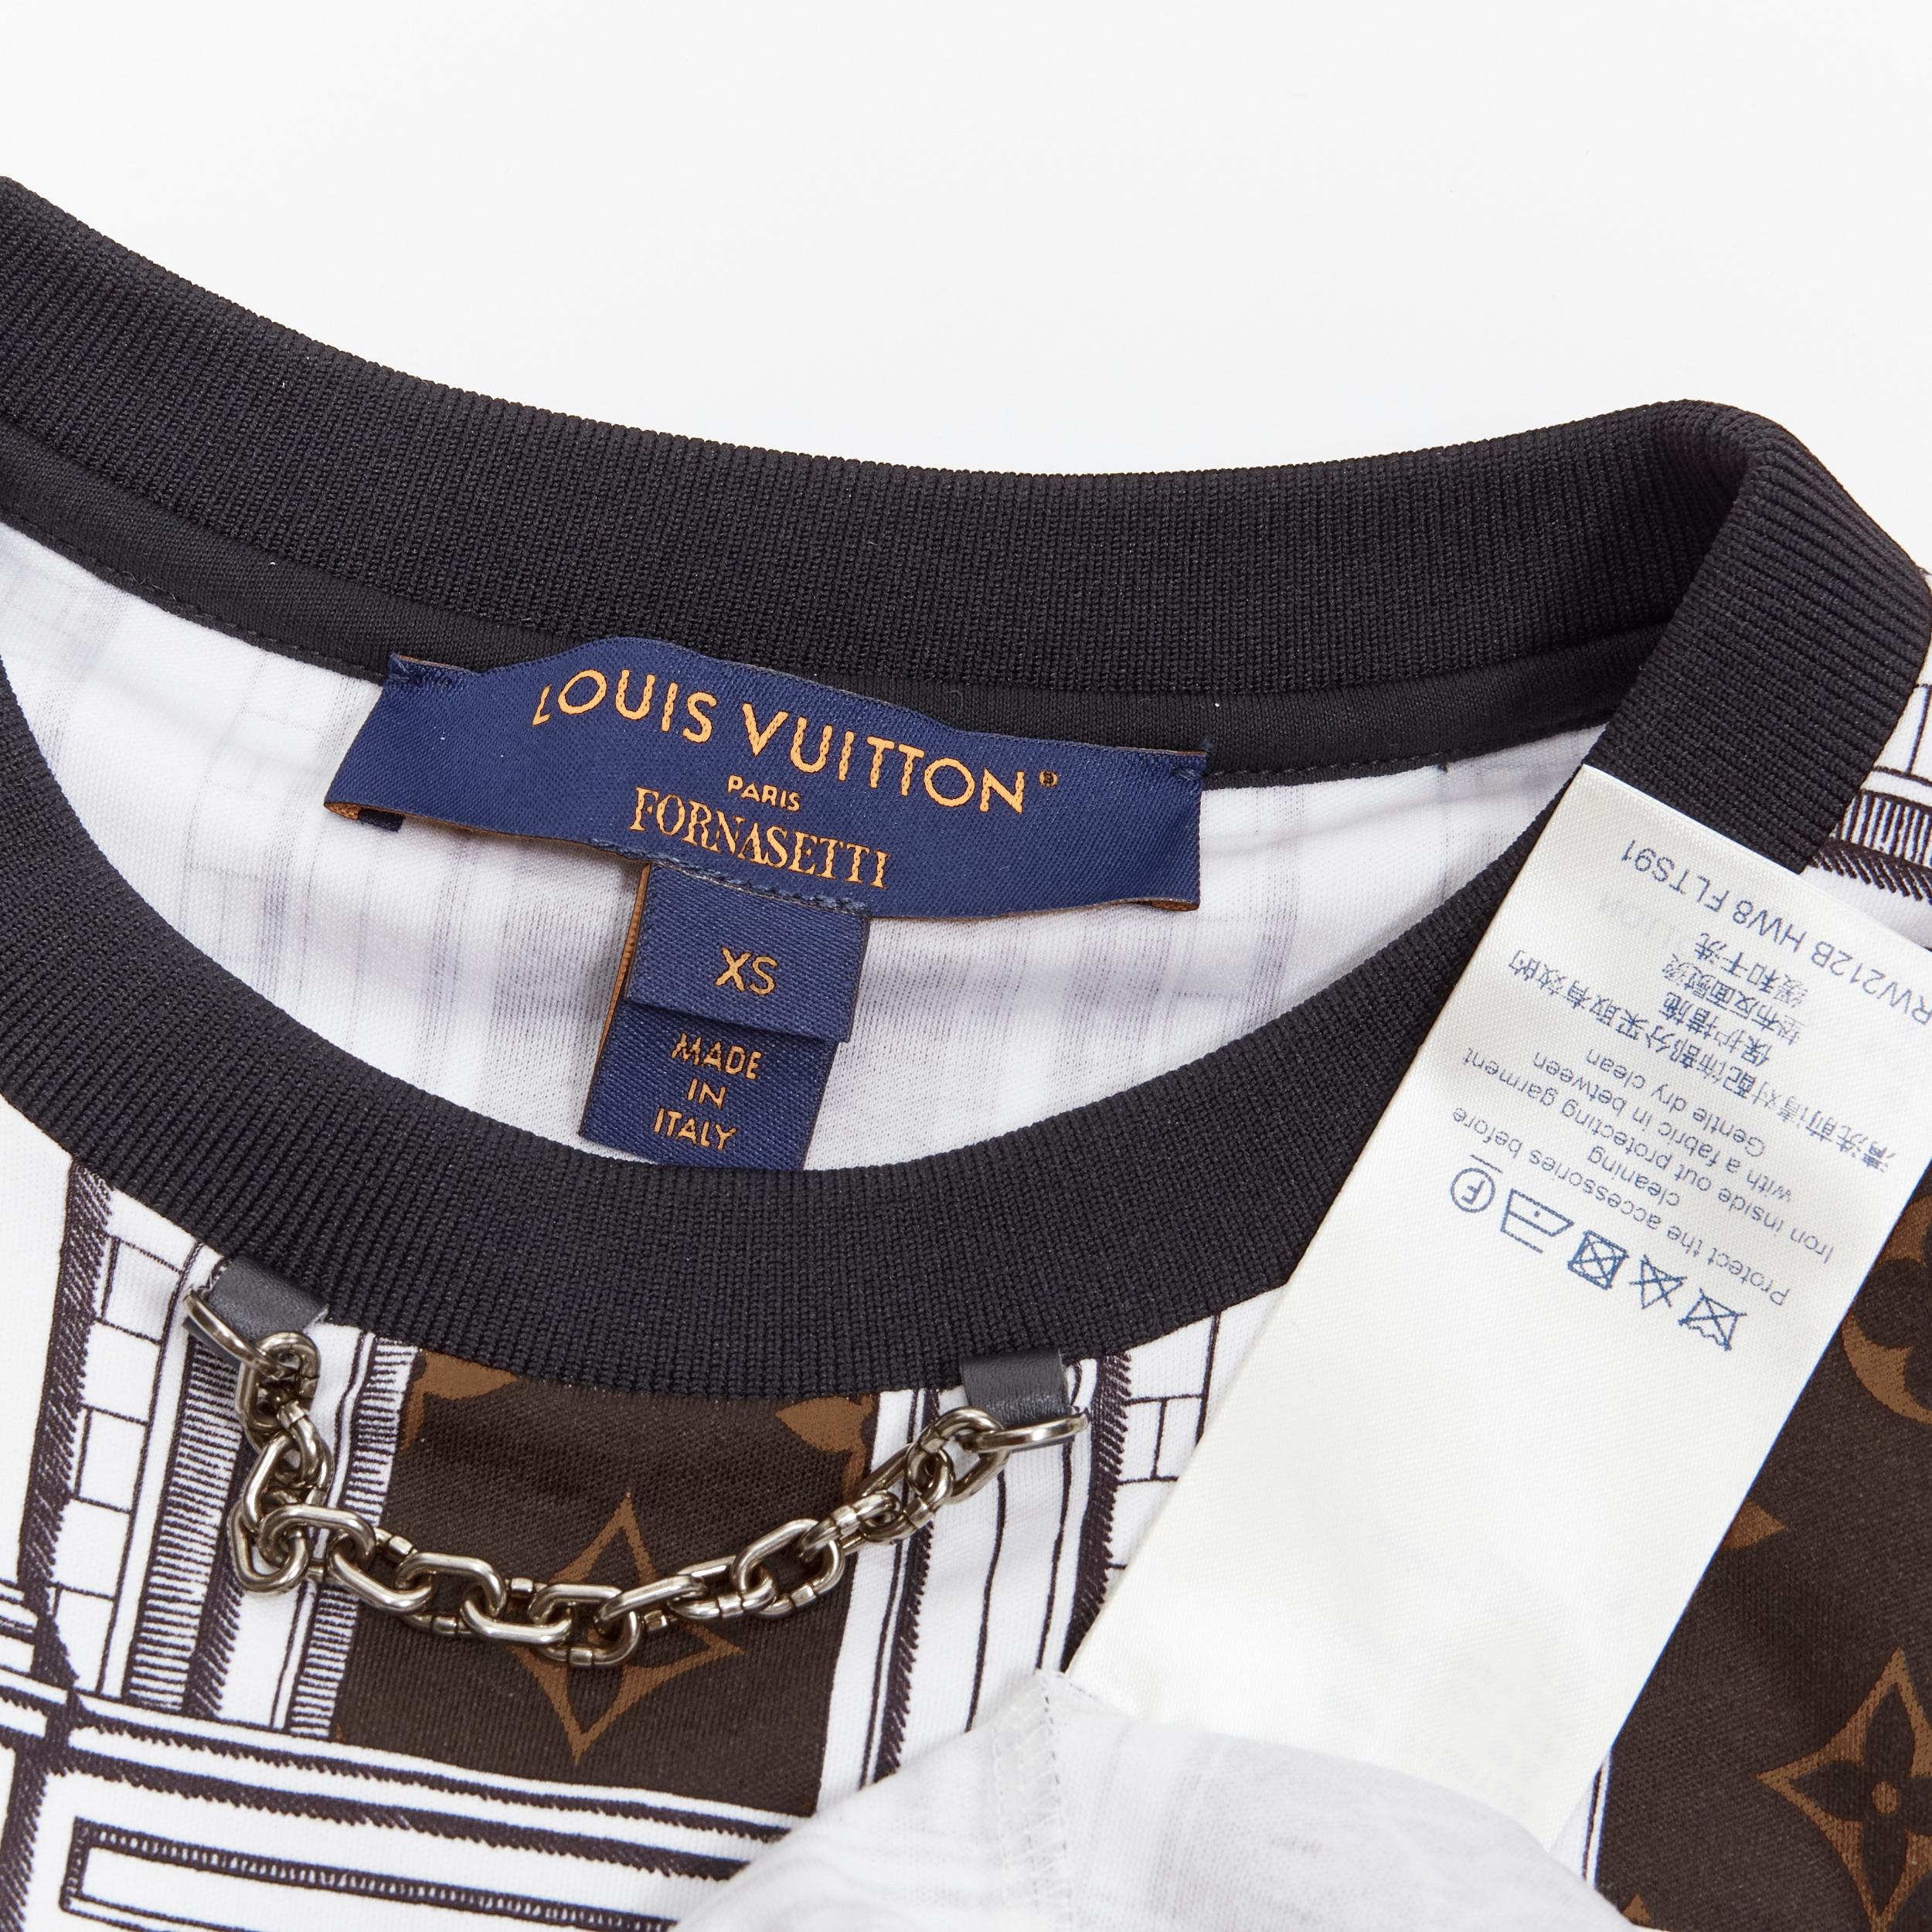 LOUIS VUITTON FORNASETTI 2021 Architettura LV monogram print cotton tshirt XS 2